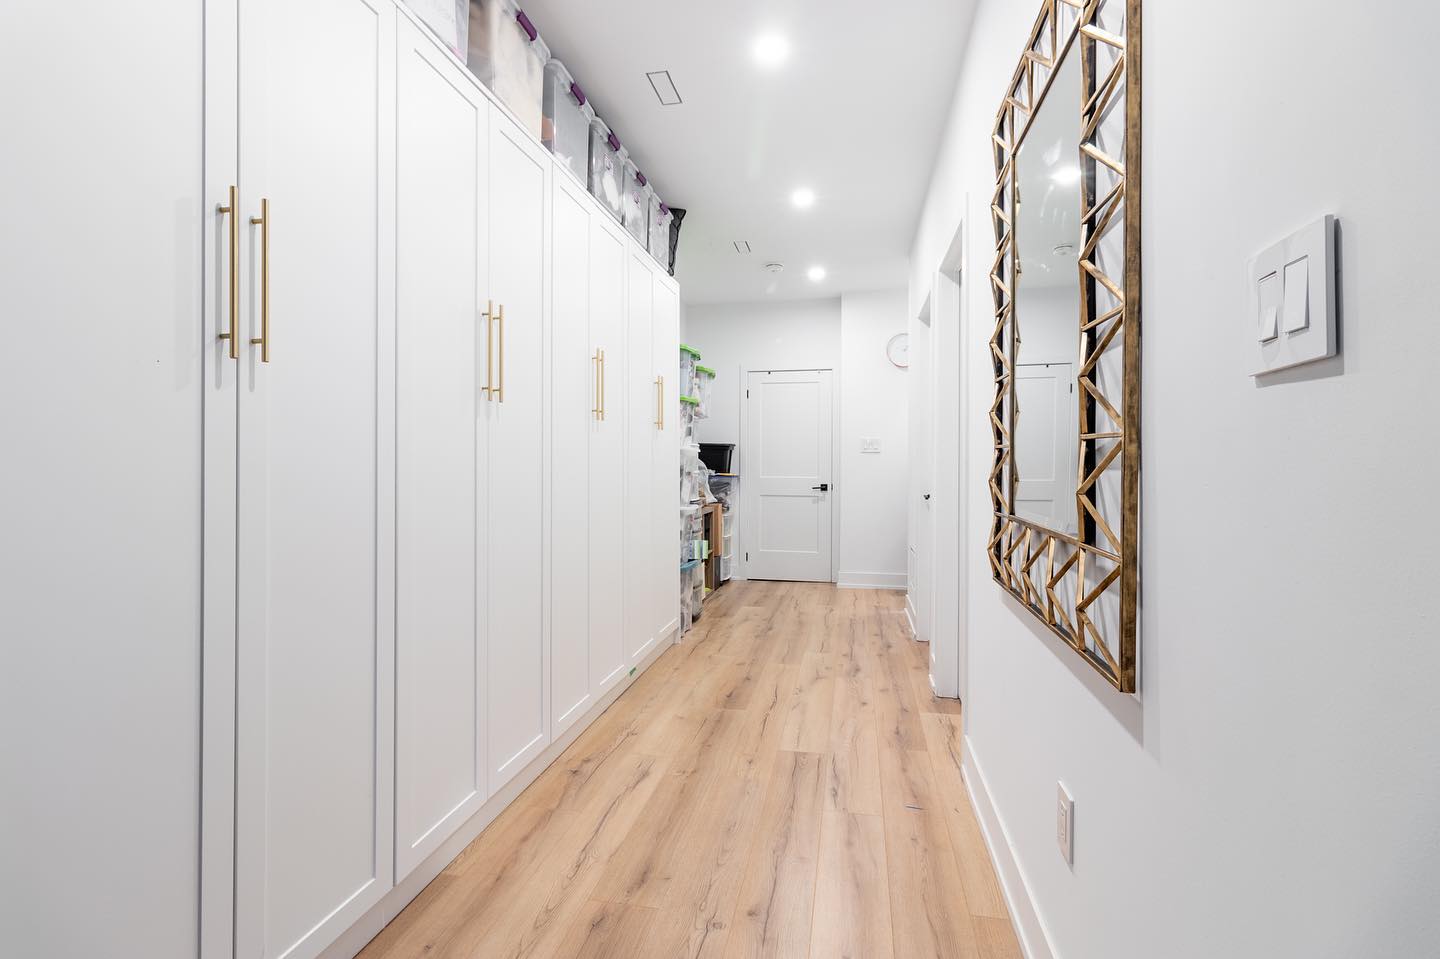 Basement storage area with storage cabinets, organized storage bins, and wood floors. Photo by Instagram user @furnishedinteriorsdevelopments